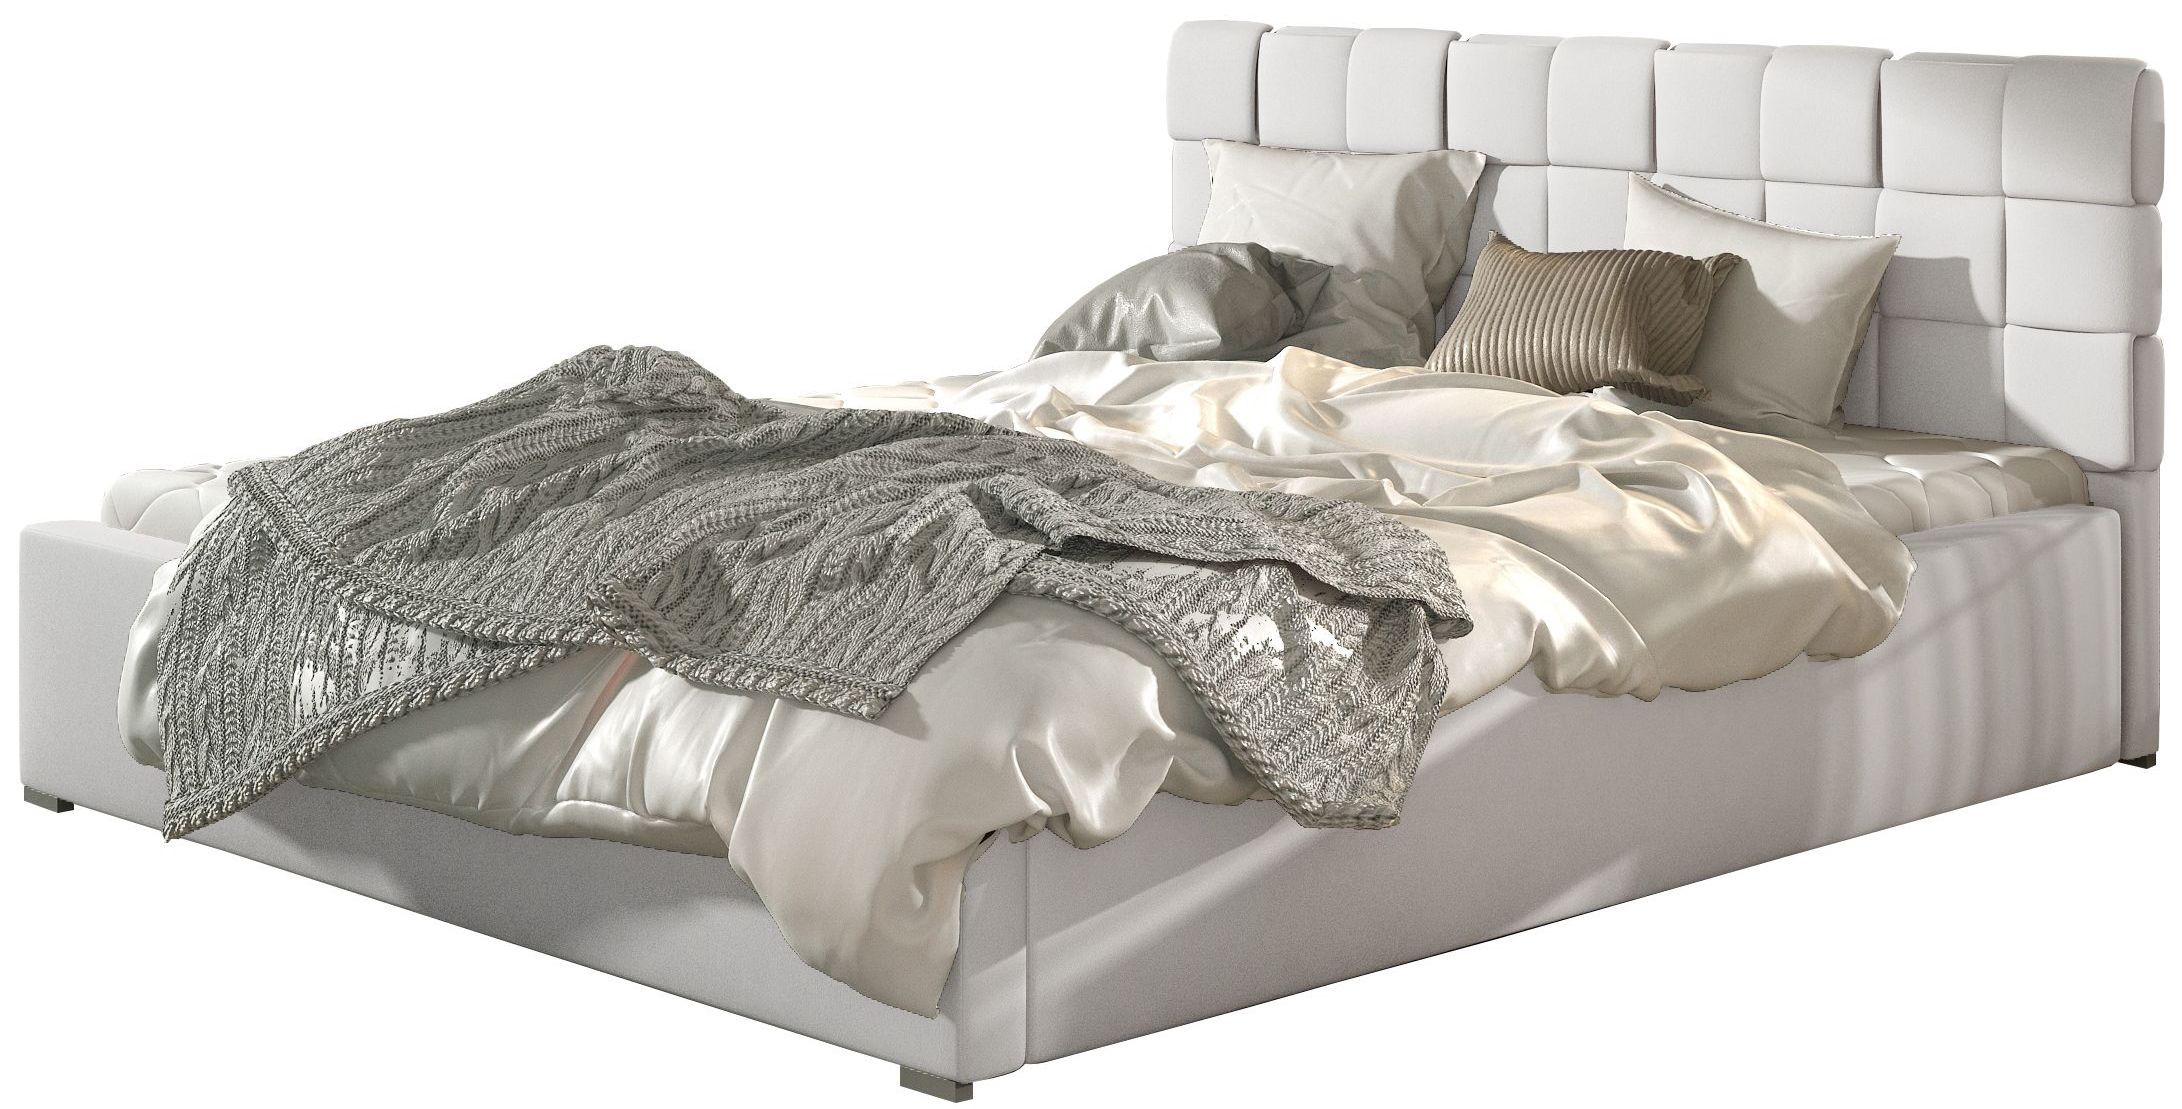 PoliHome Επενδυμένο κρεβάτι Grady-160 x 200-Με μηχανισμό ανύψωσης-Leuko